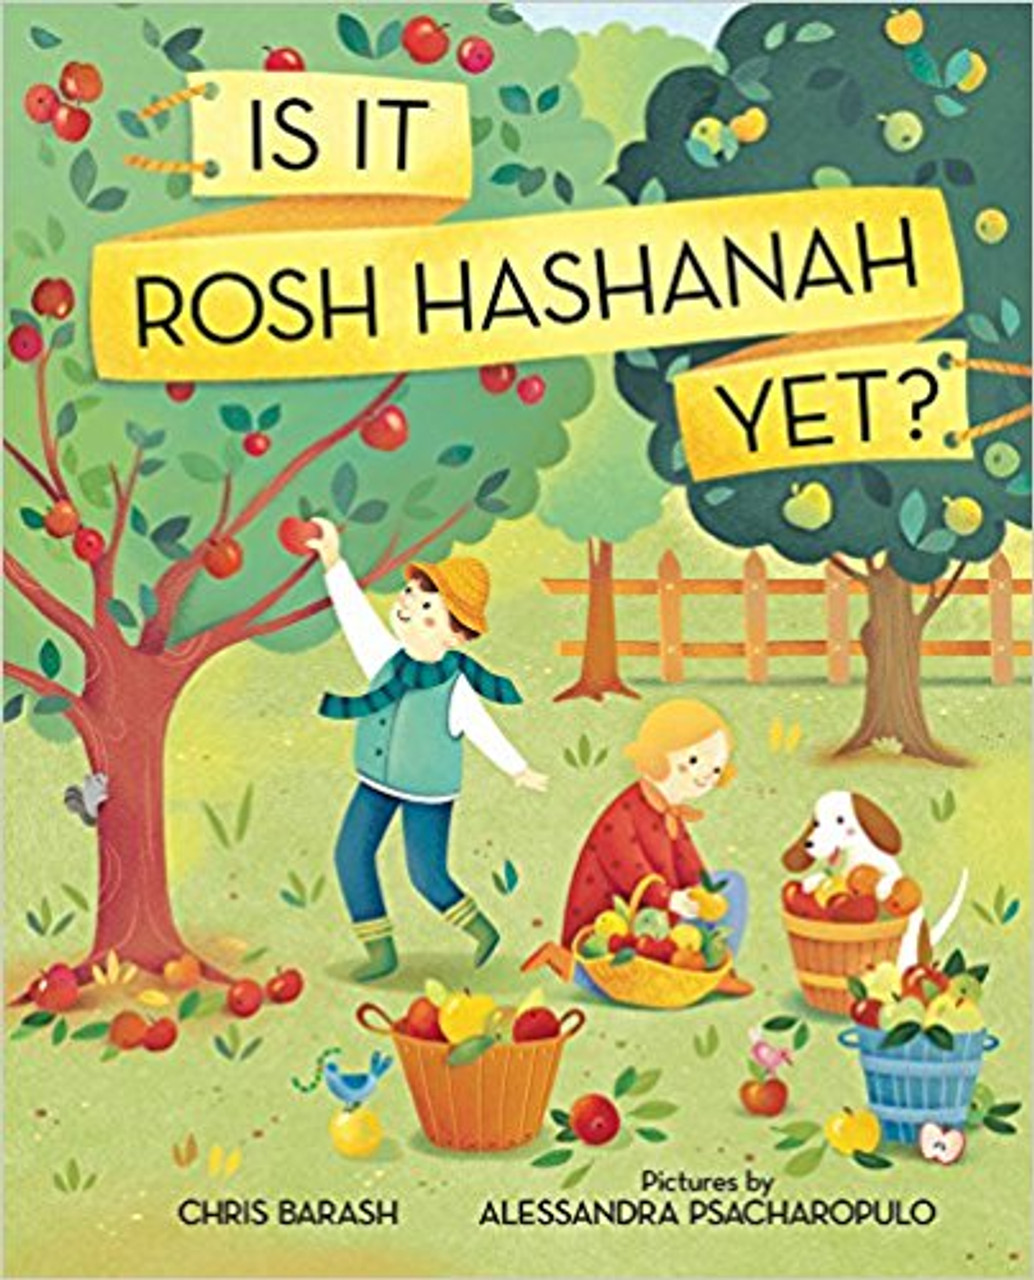 Is It Rosh Hashanah Yet? by Chris Barash